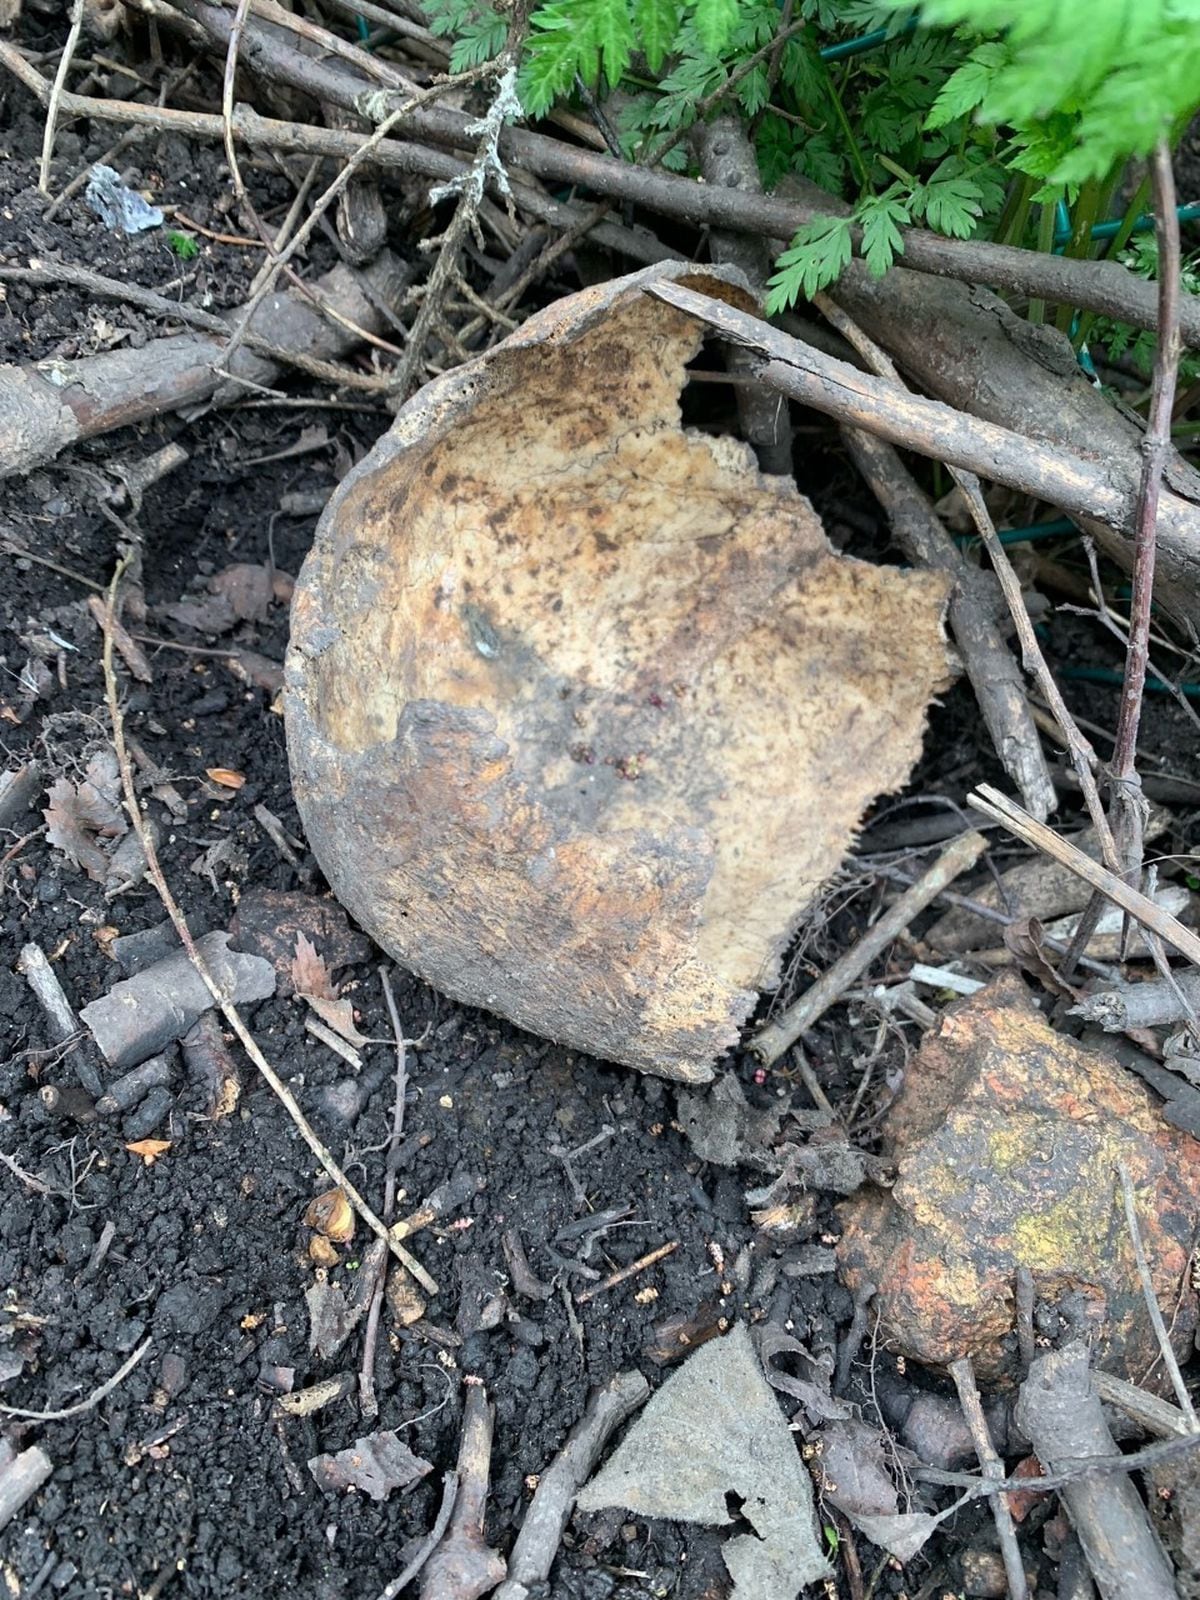 Large fragment of bone found in the garden